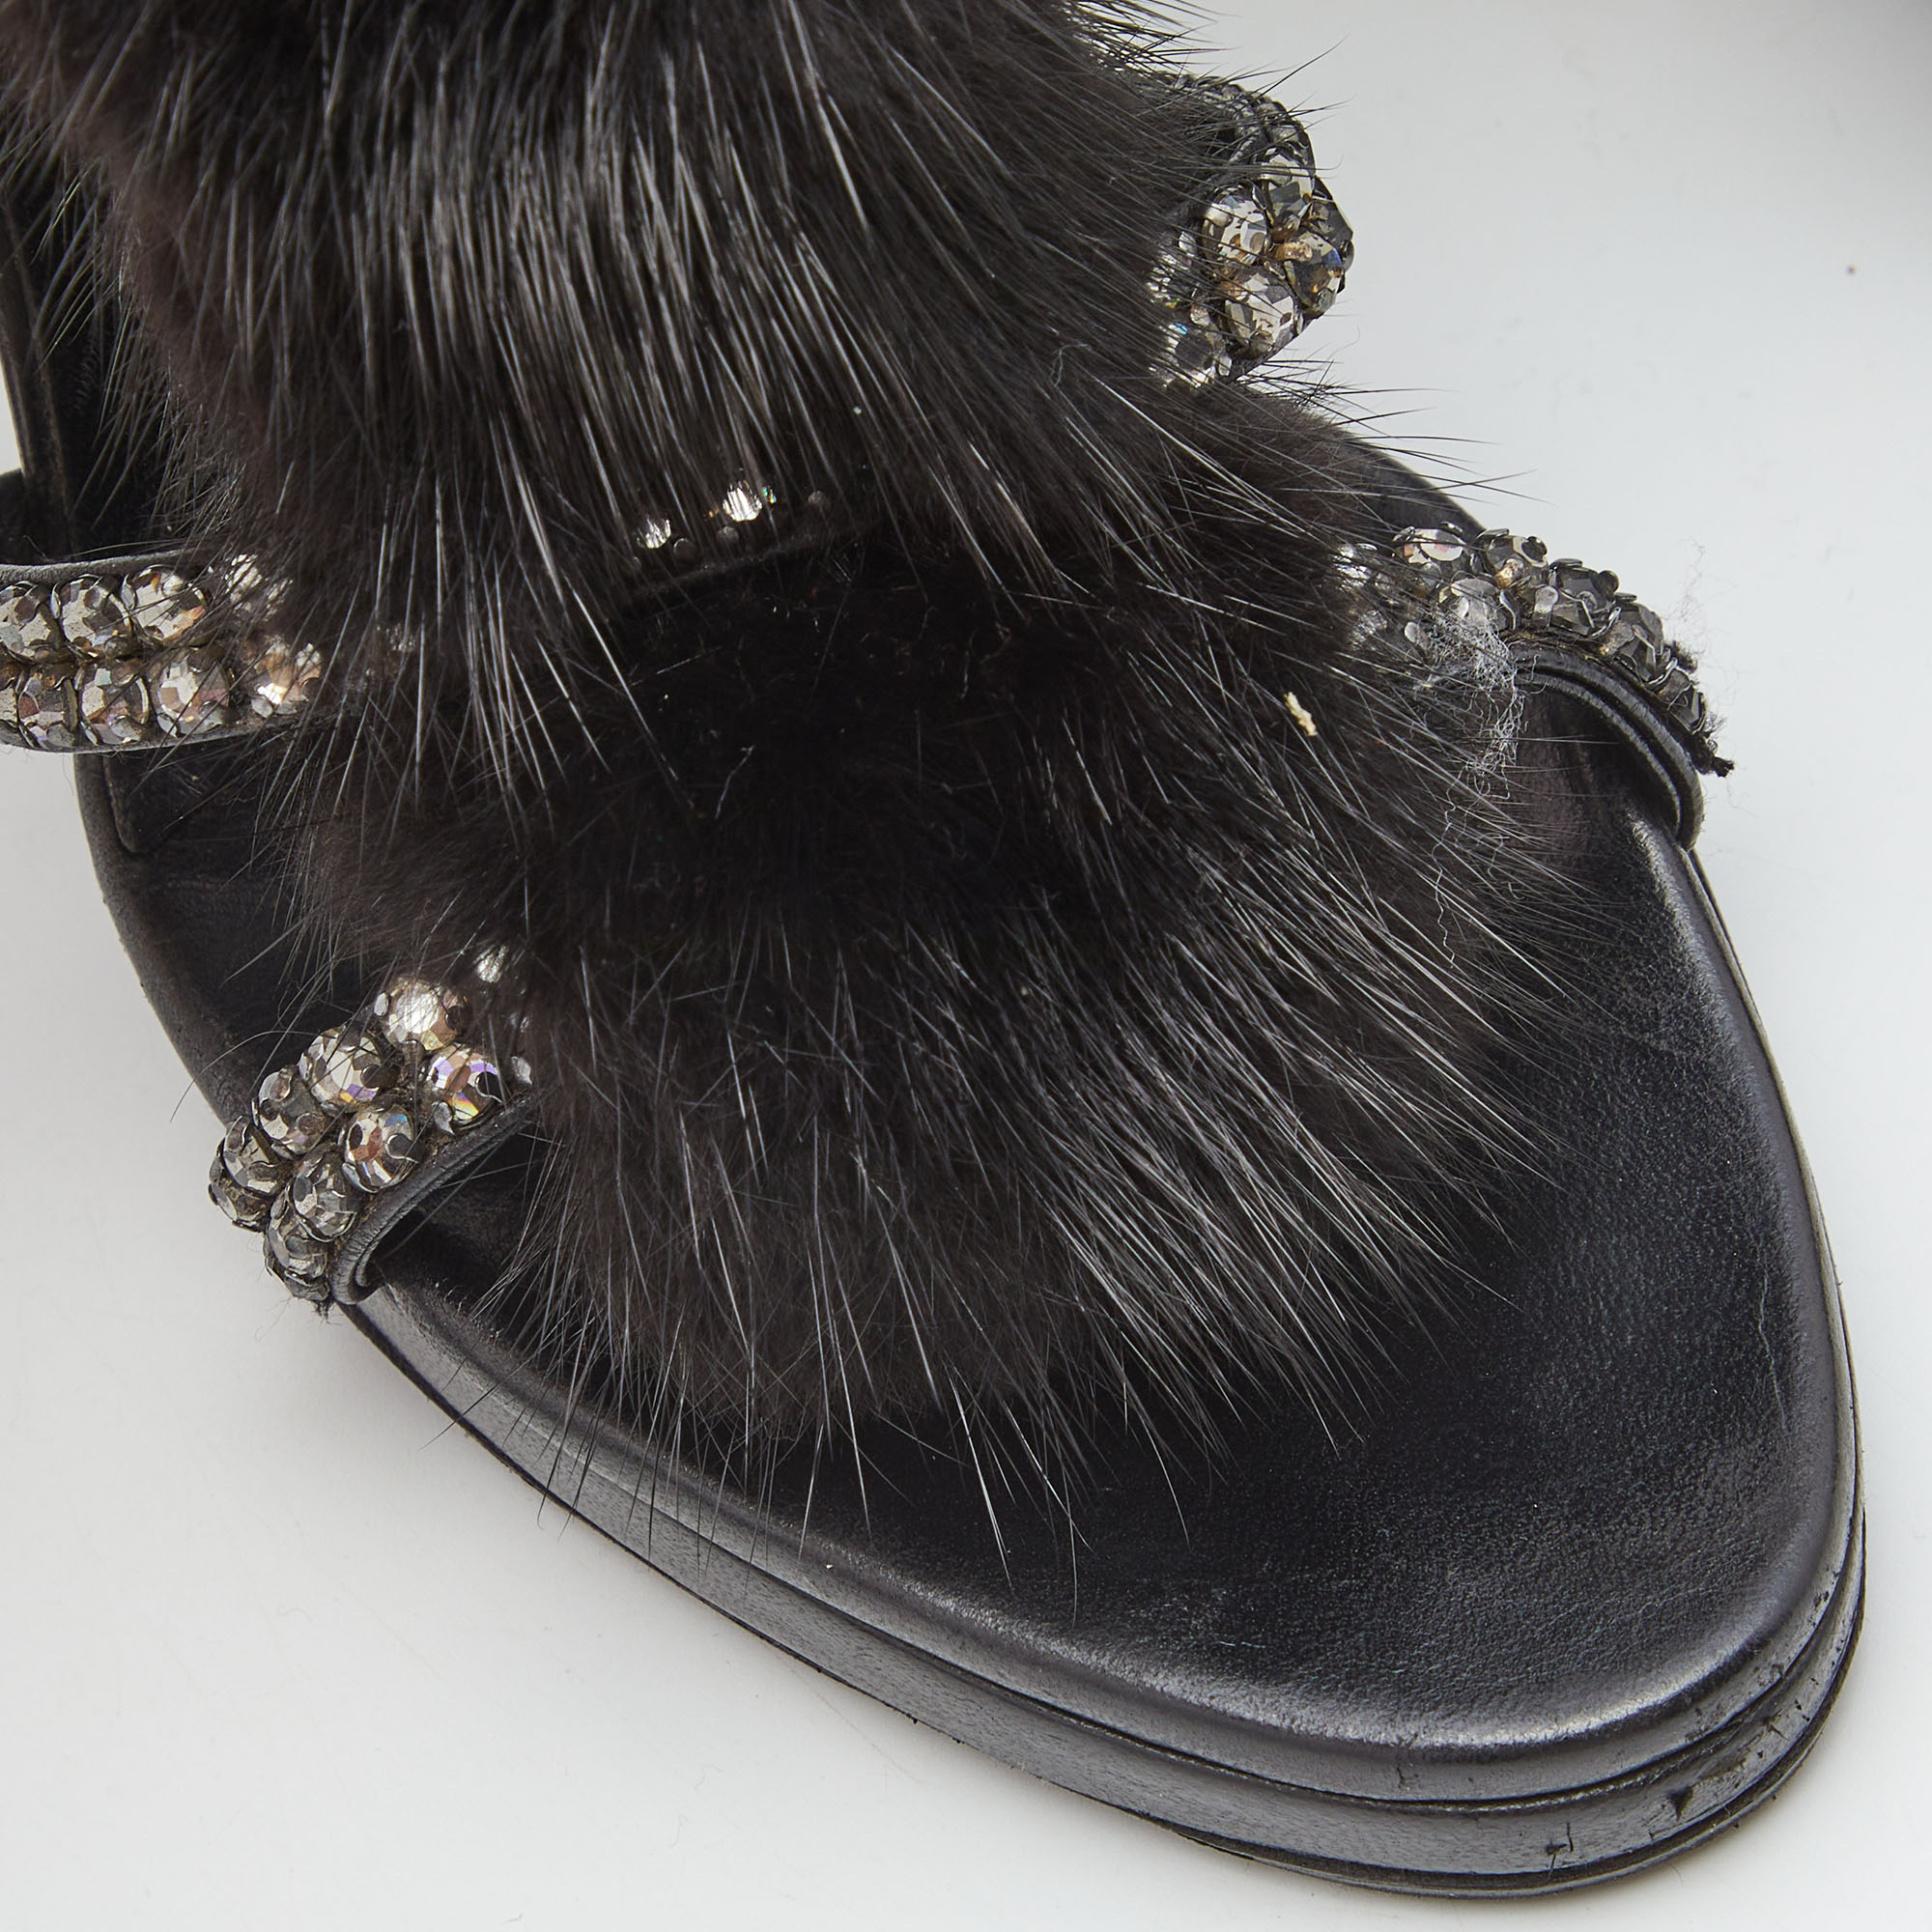 Gucci Black Python Leather And Mink Fur Crystal Embellished Ankle Wrap Sandals Size 36